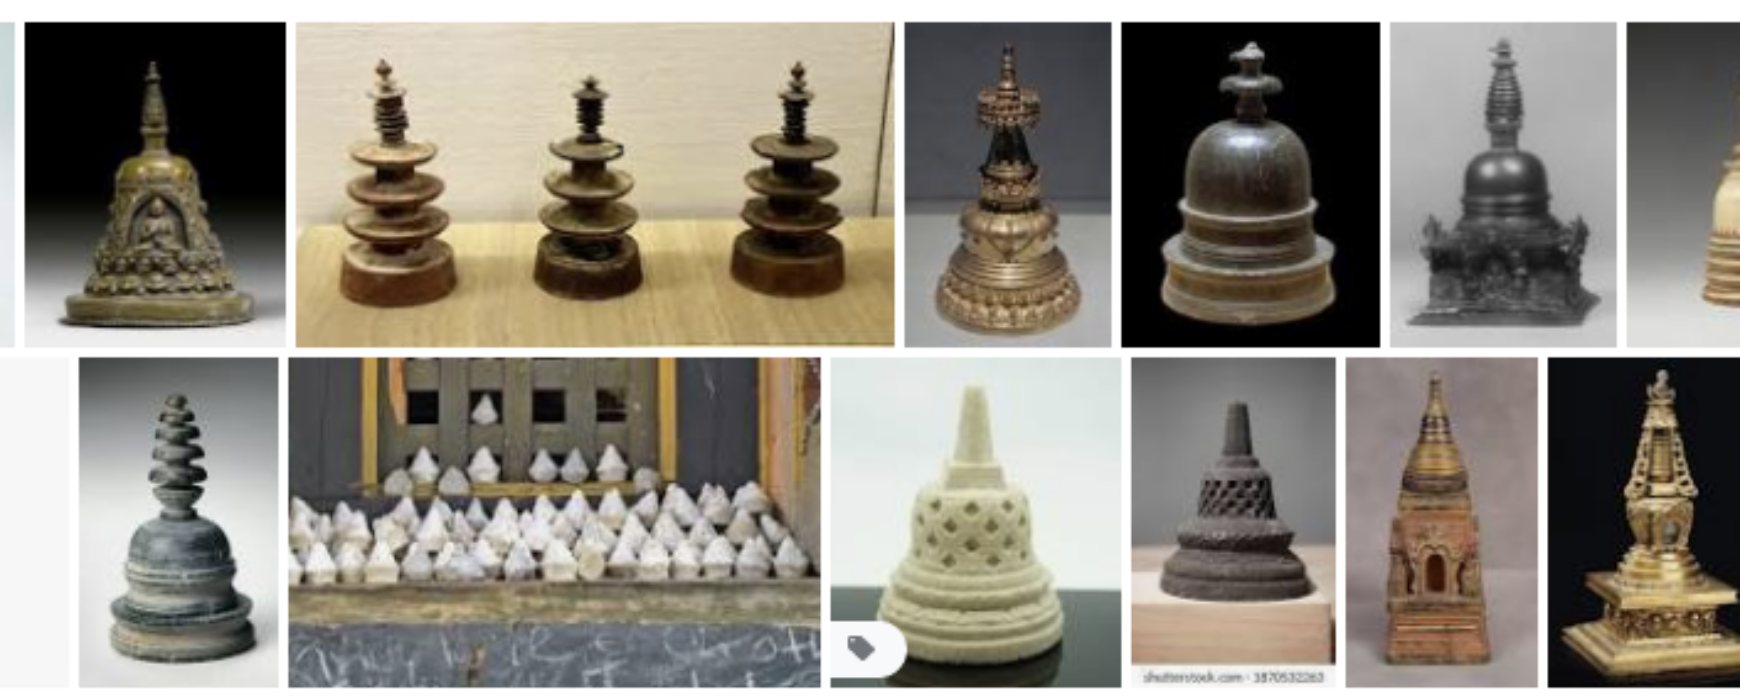 Call for Submissions: Temple University Miniature Stupa Design Contest 天普大学小型佛塔设计比赛